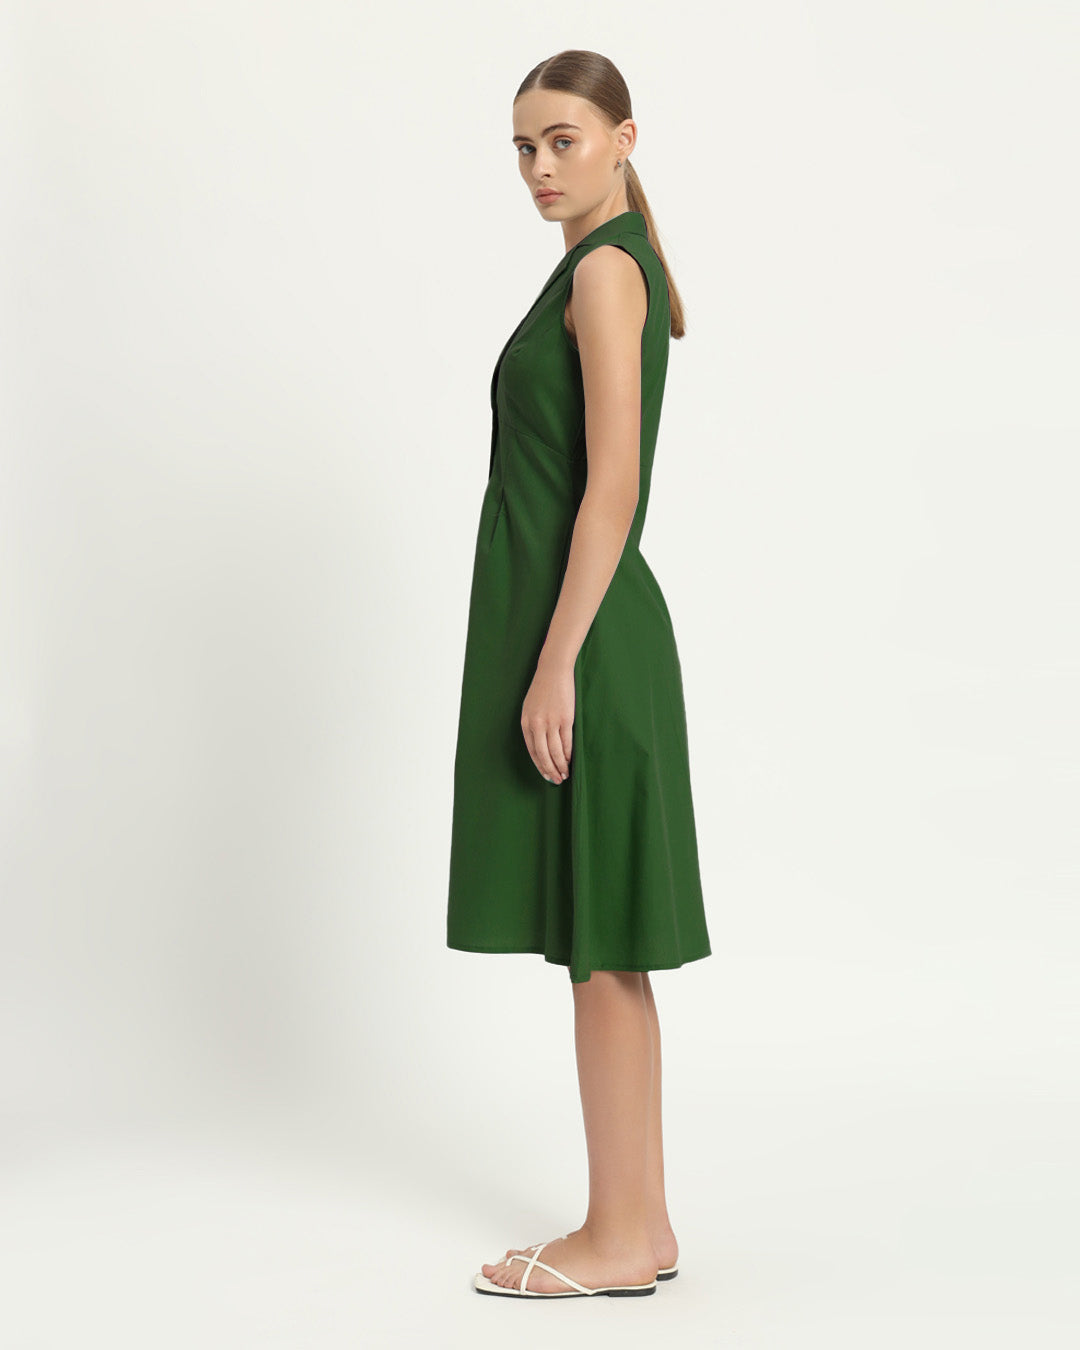 The Germering Emerald Cotton Dress